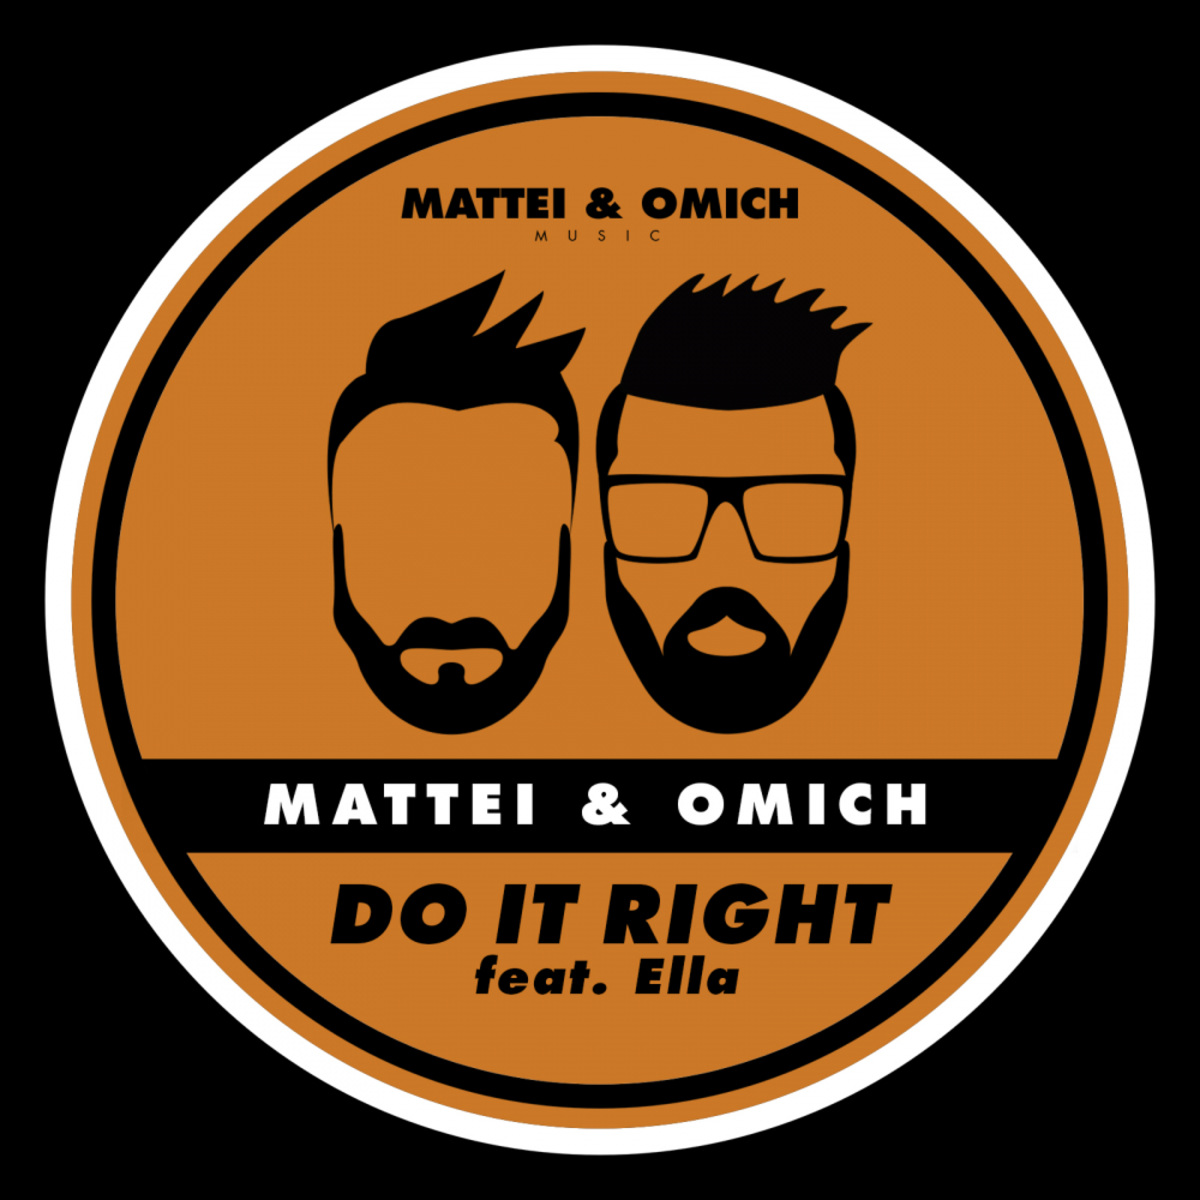 Mattei & Omich ft Ella - Do It Right / Mattei & Omich Music